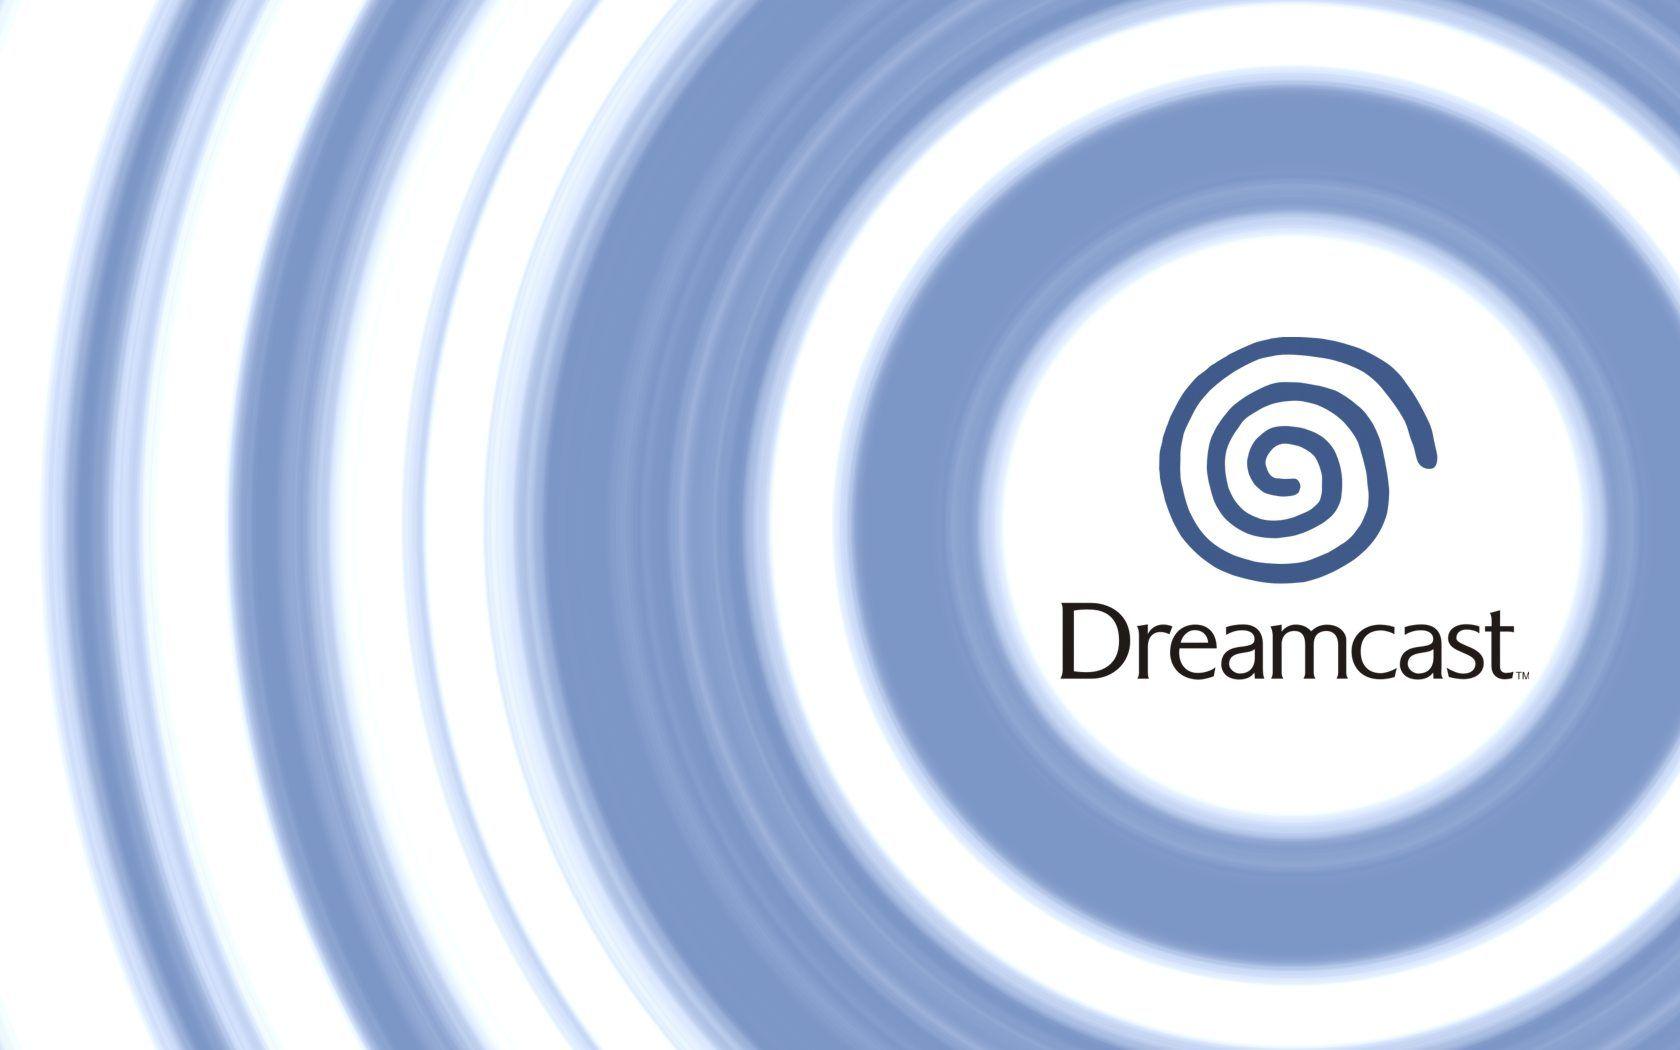 V.28: Dreamcast Wallpaper, HD Image of Dreamcast, Ultra HD 4K